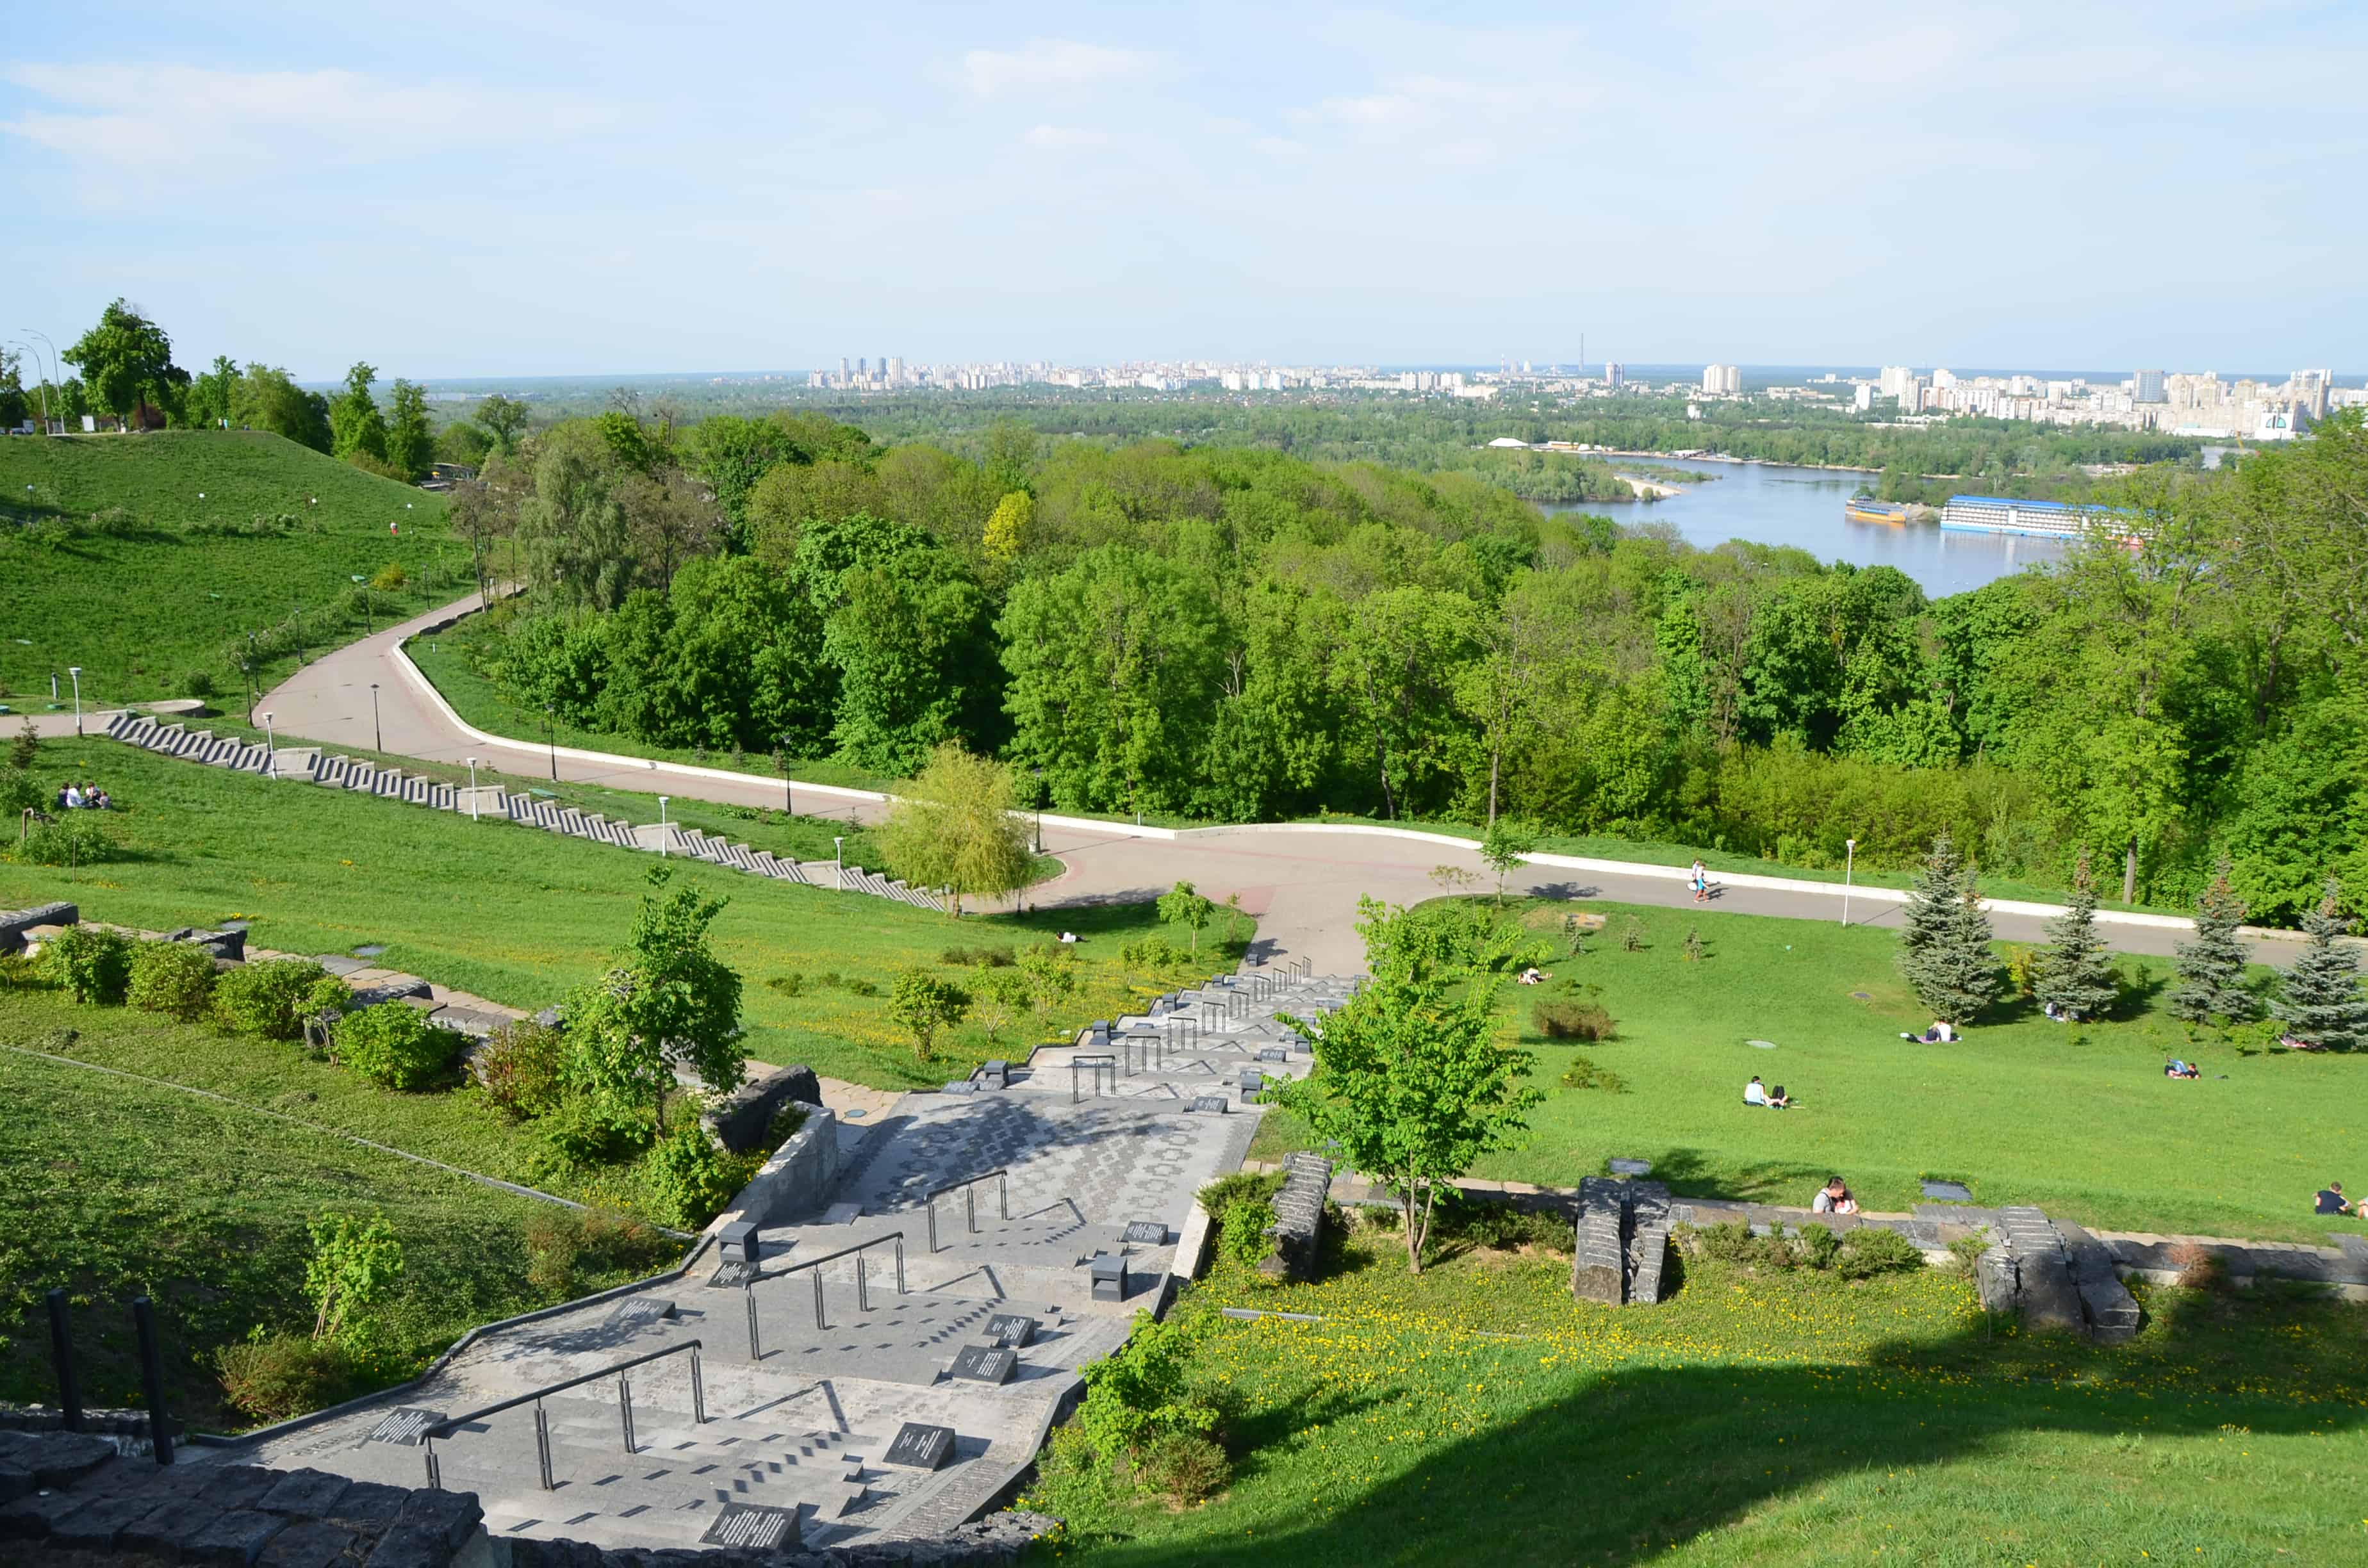 Slavy Park in Kyiv, Ukraine